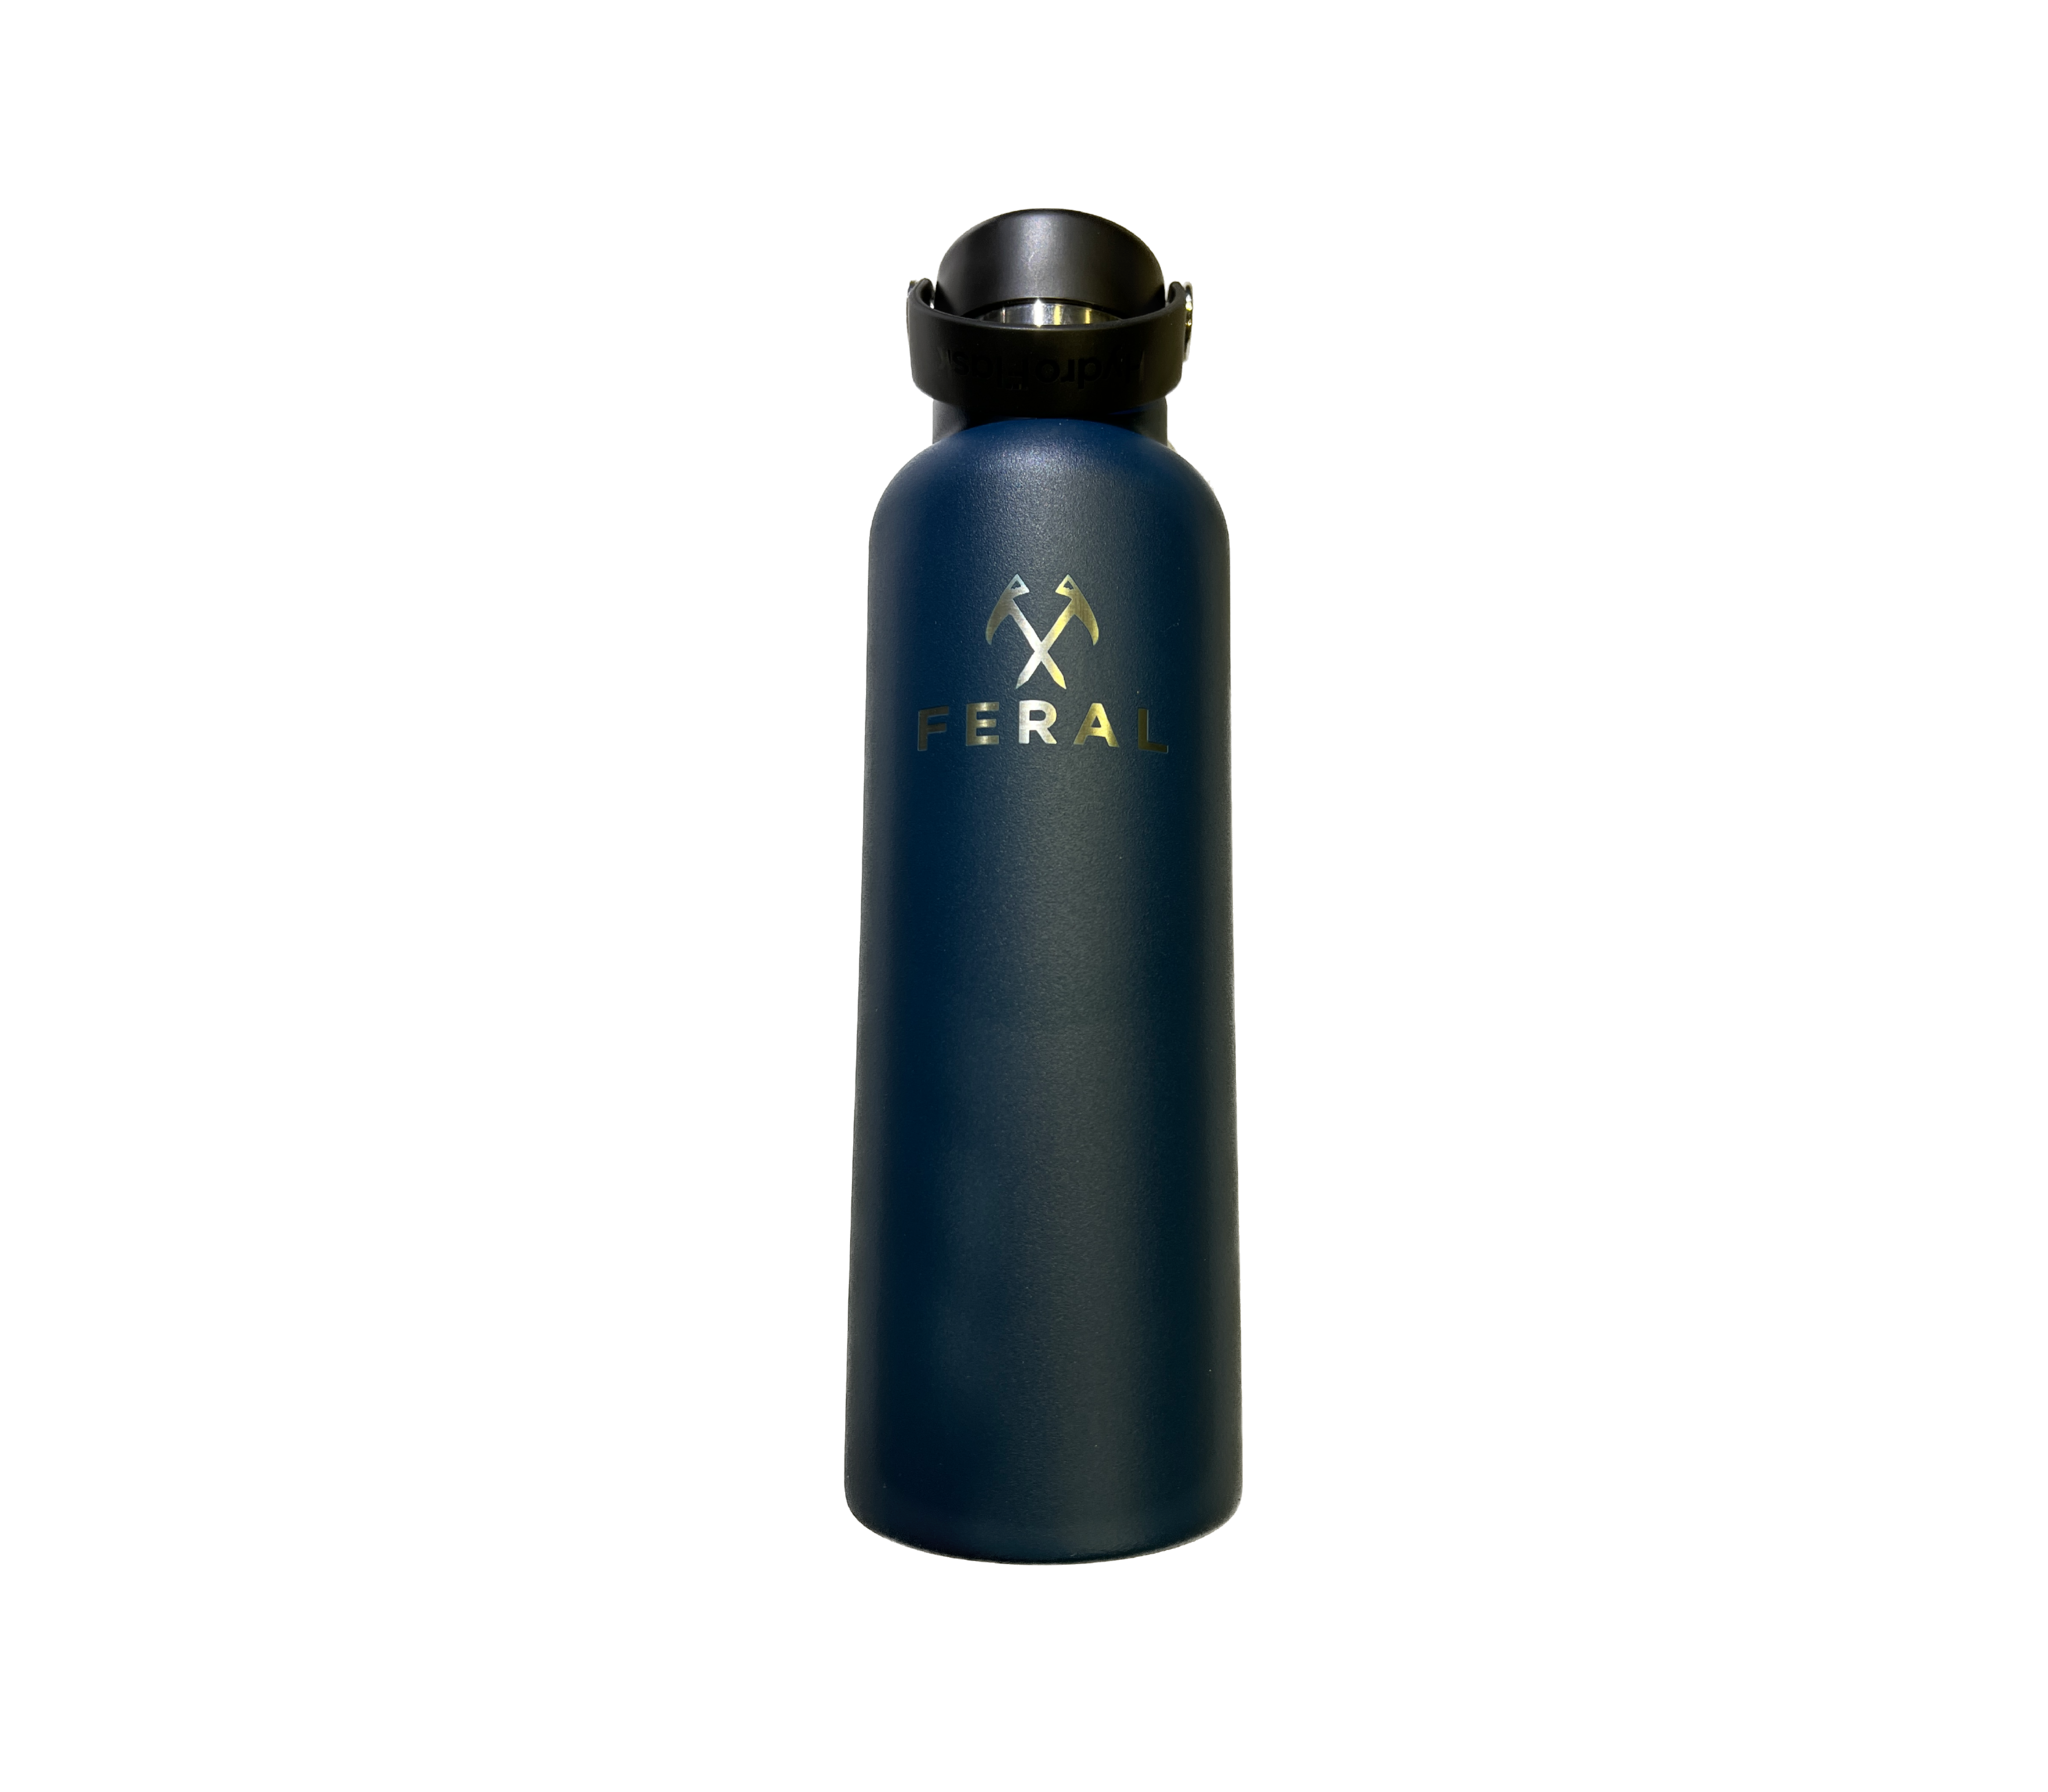 Hydro Flask Standard Mouth 21 oz Water Bottle